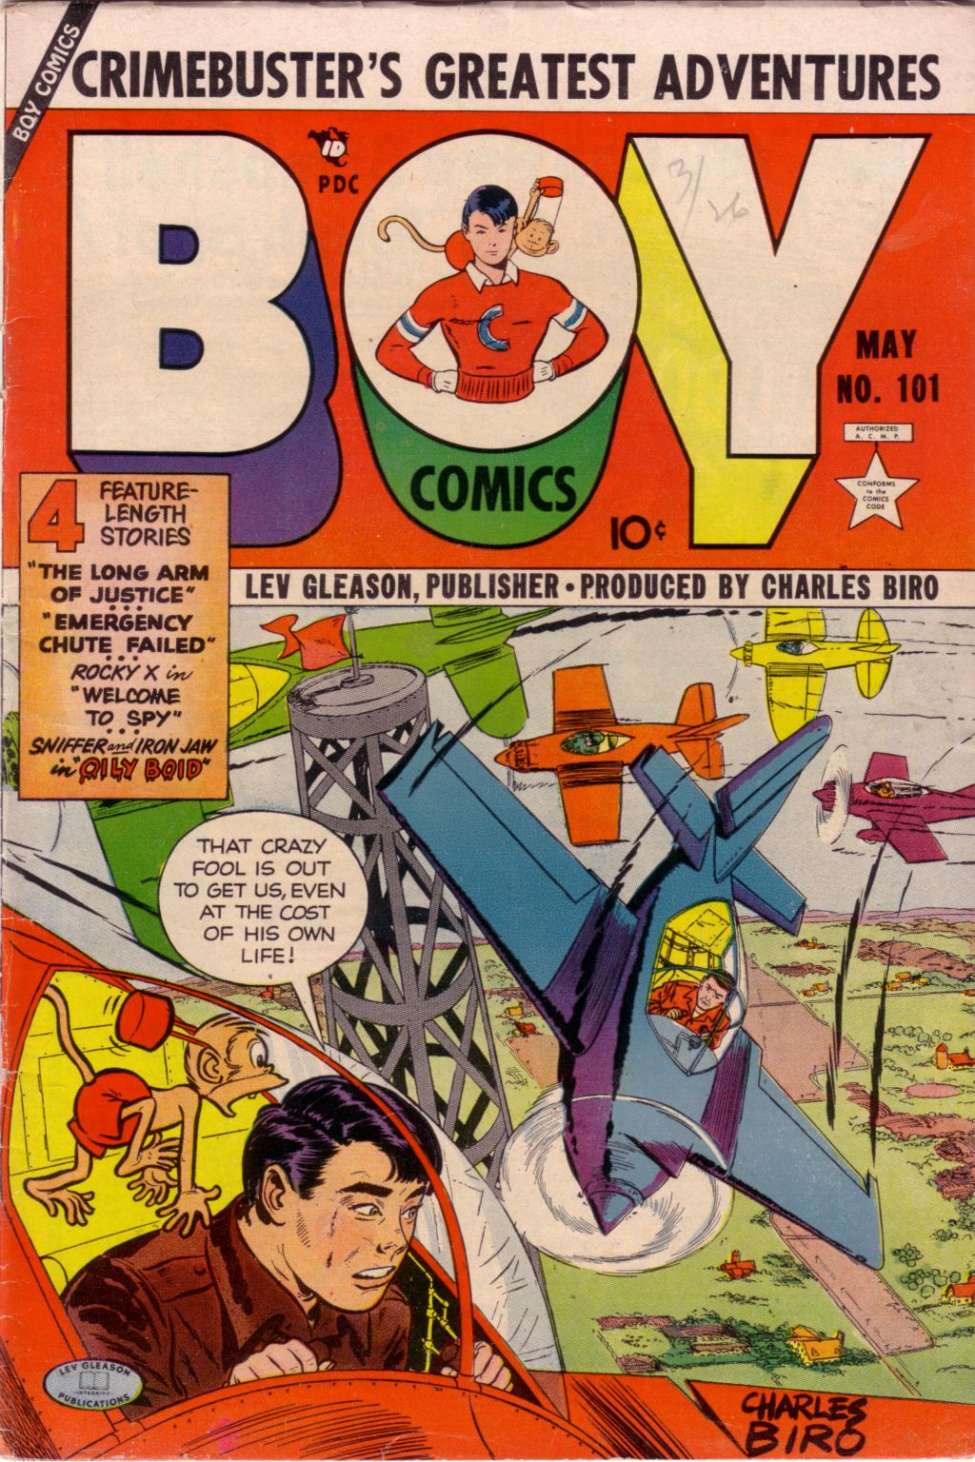 Comic Book Cover For Boy Comics 101